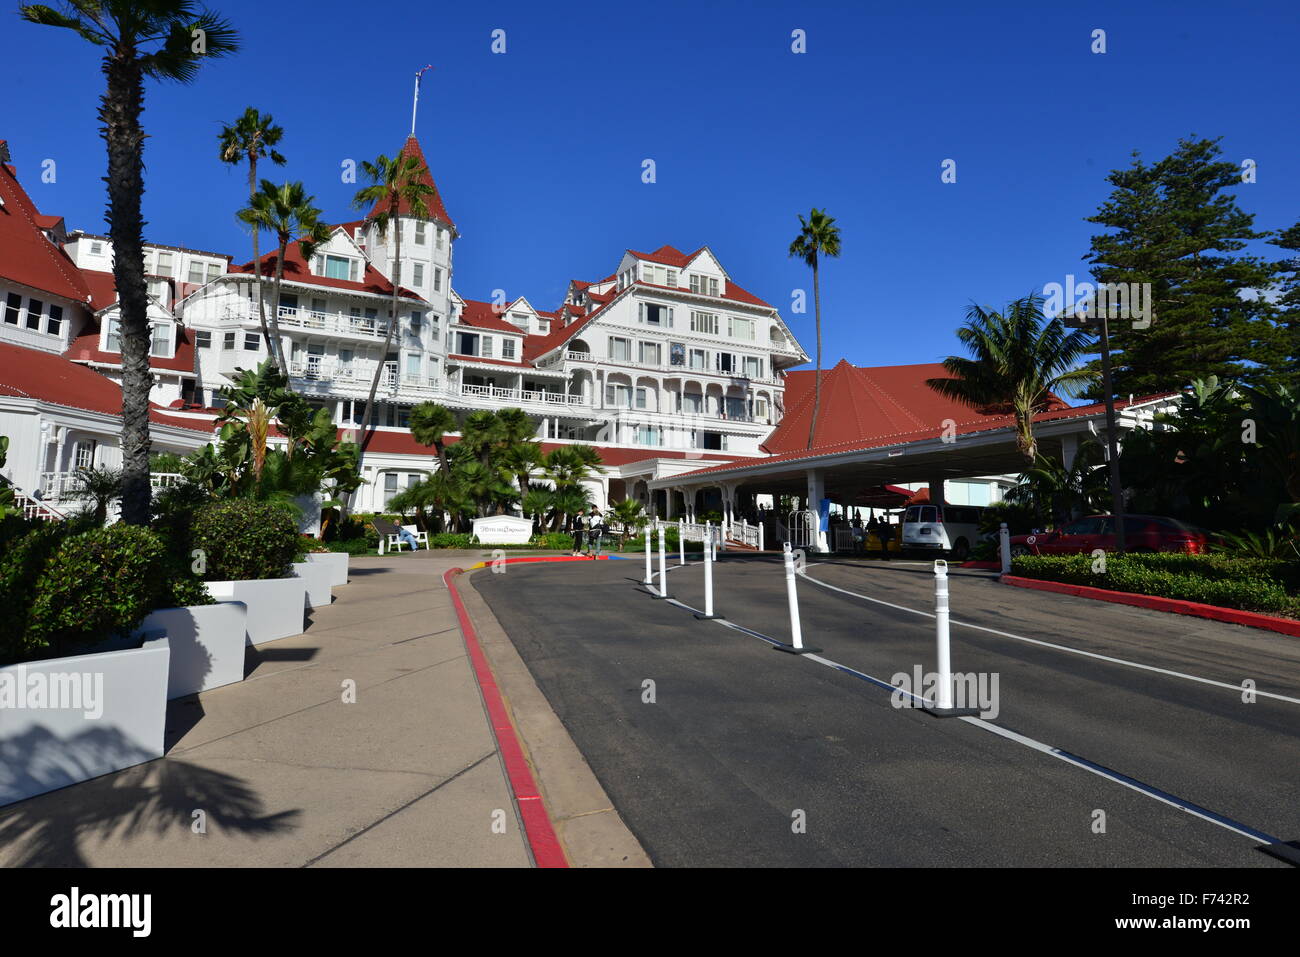 Hotel del Coronado  beach front hotel in the city of Coronado, Stock Photo